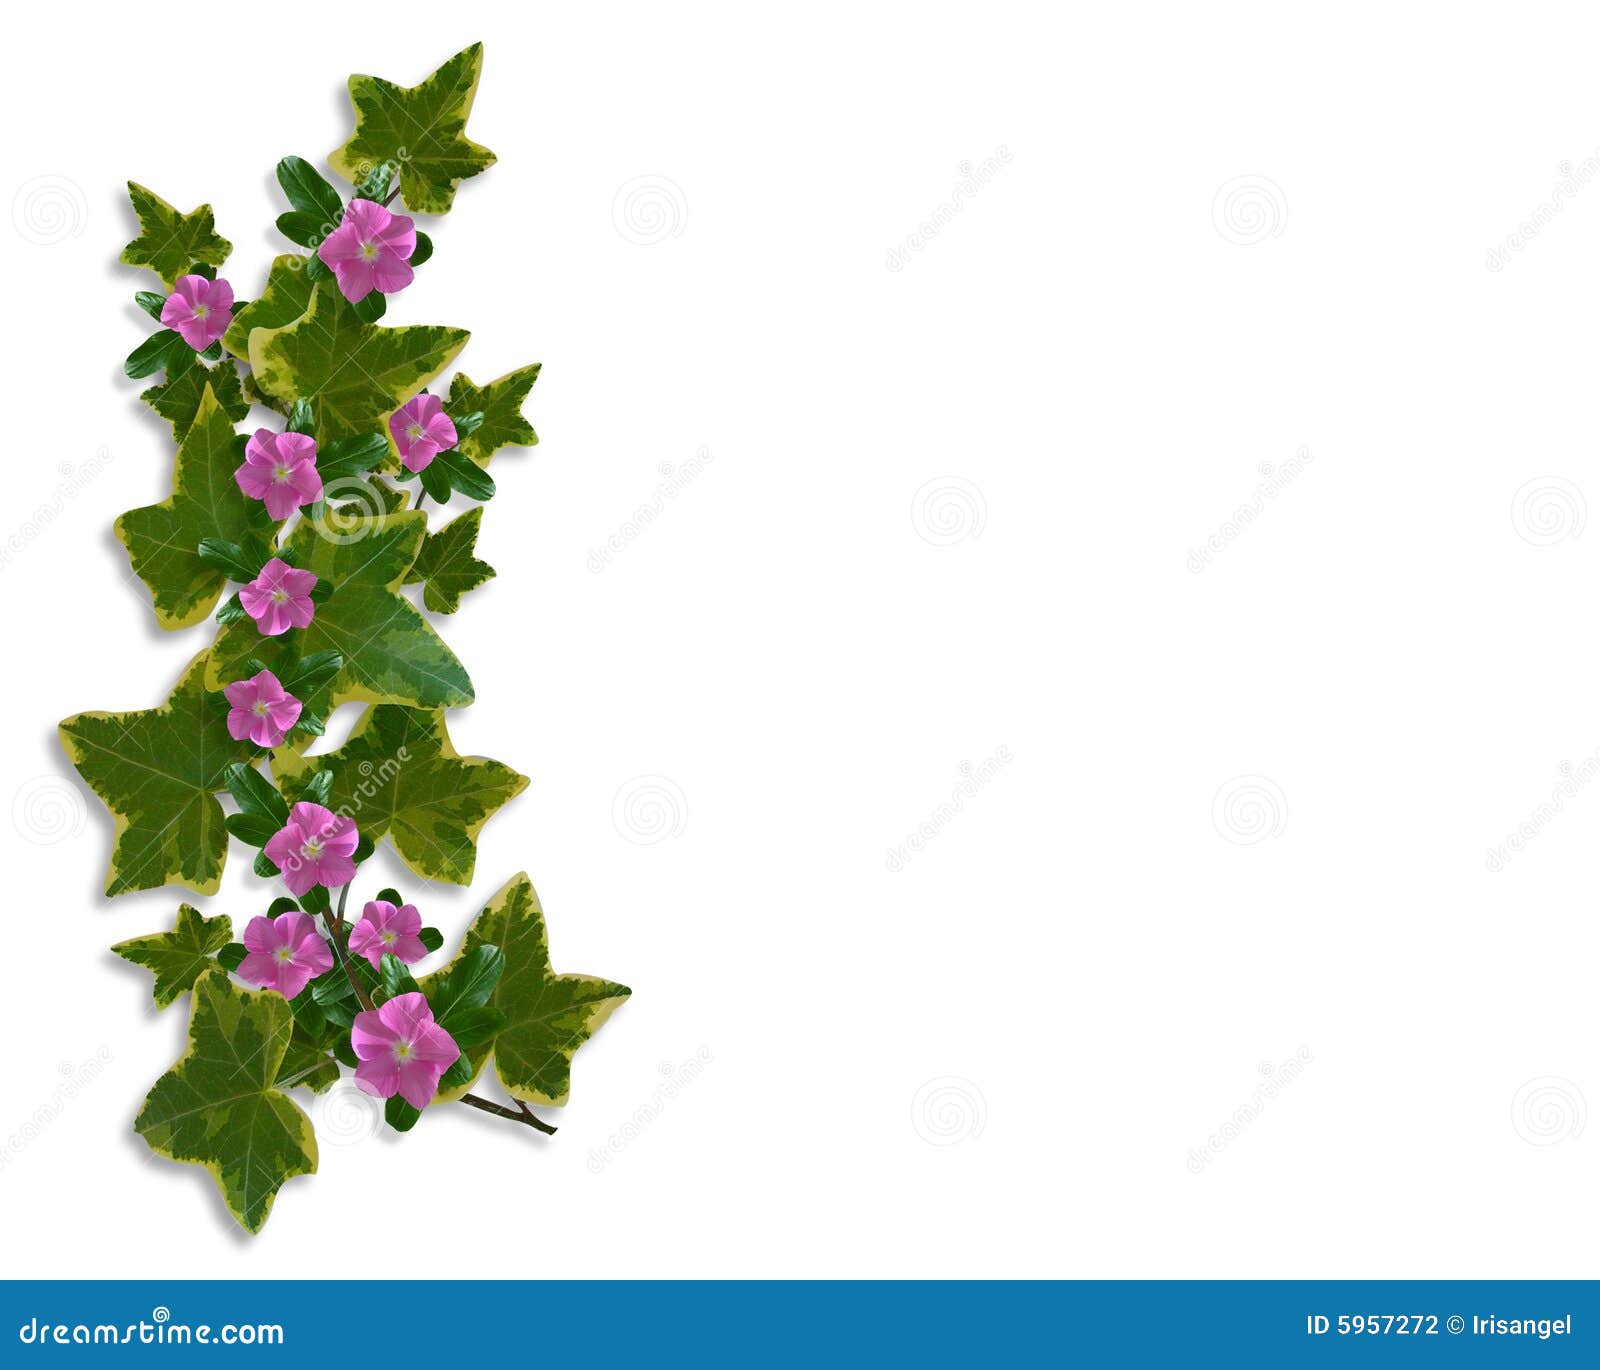 Ivy Floral Design Border Element Stock Photography  Image 